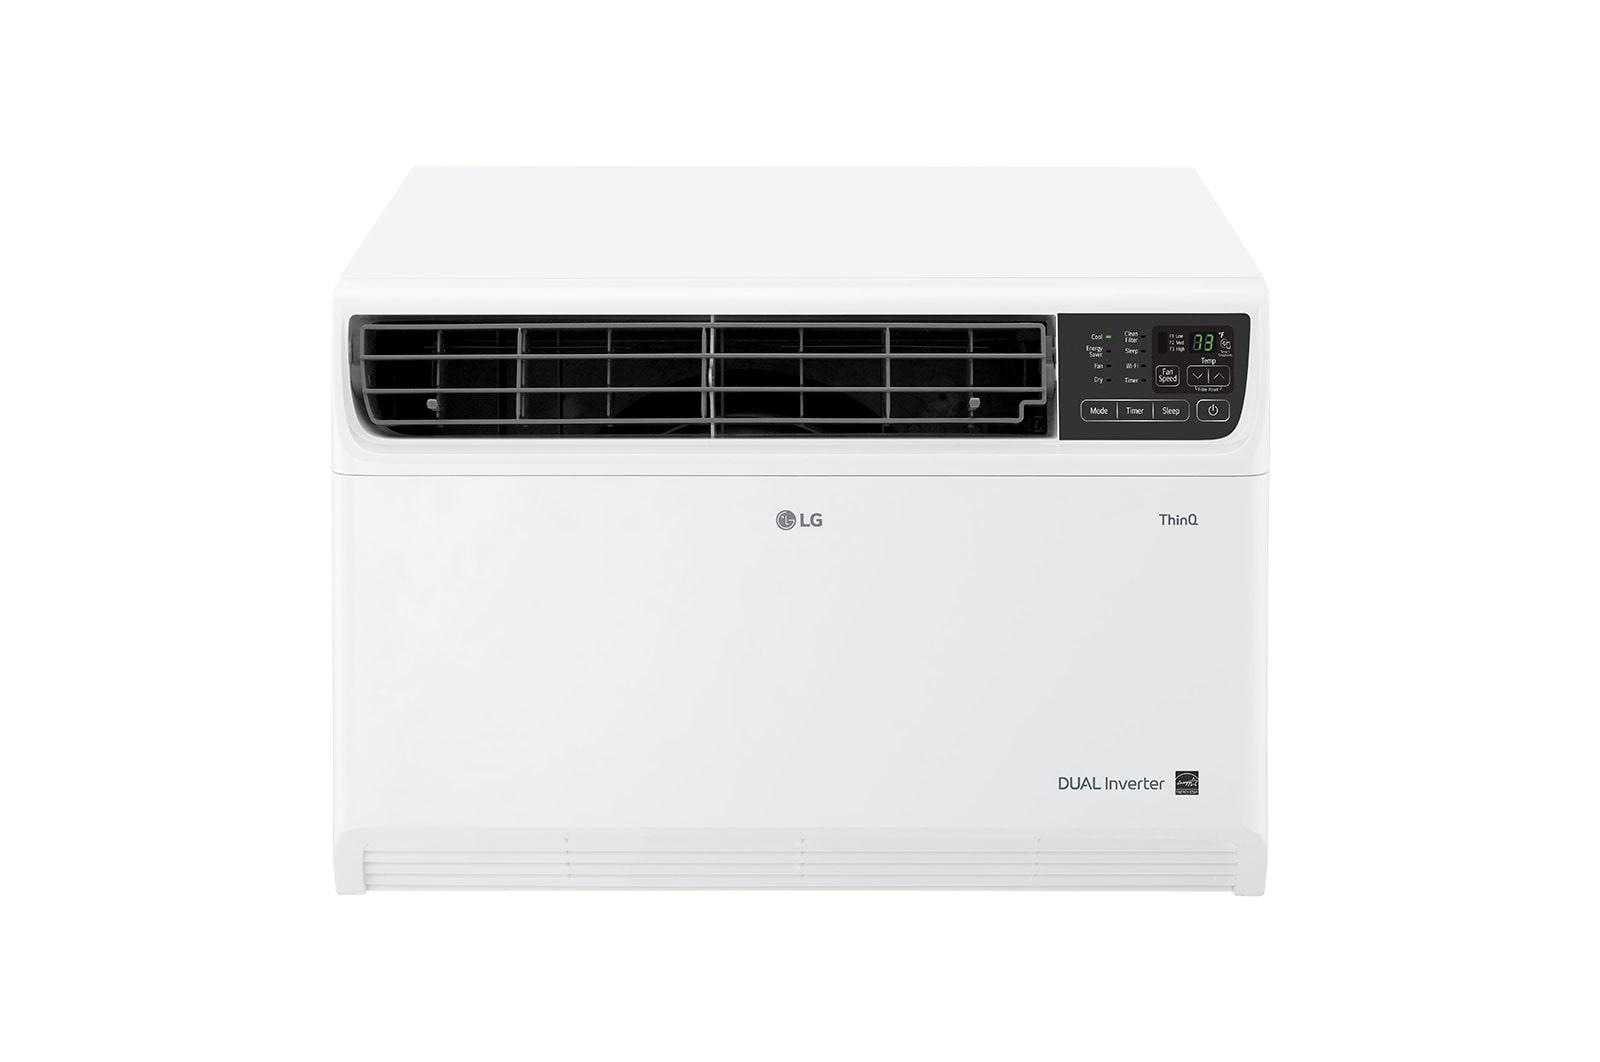 Lg 12,000 BTU DUAL Inverter Smart Wi-Fi Enabled Window Air Conditioner